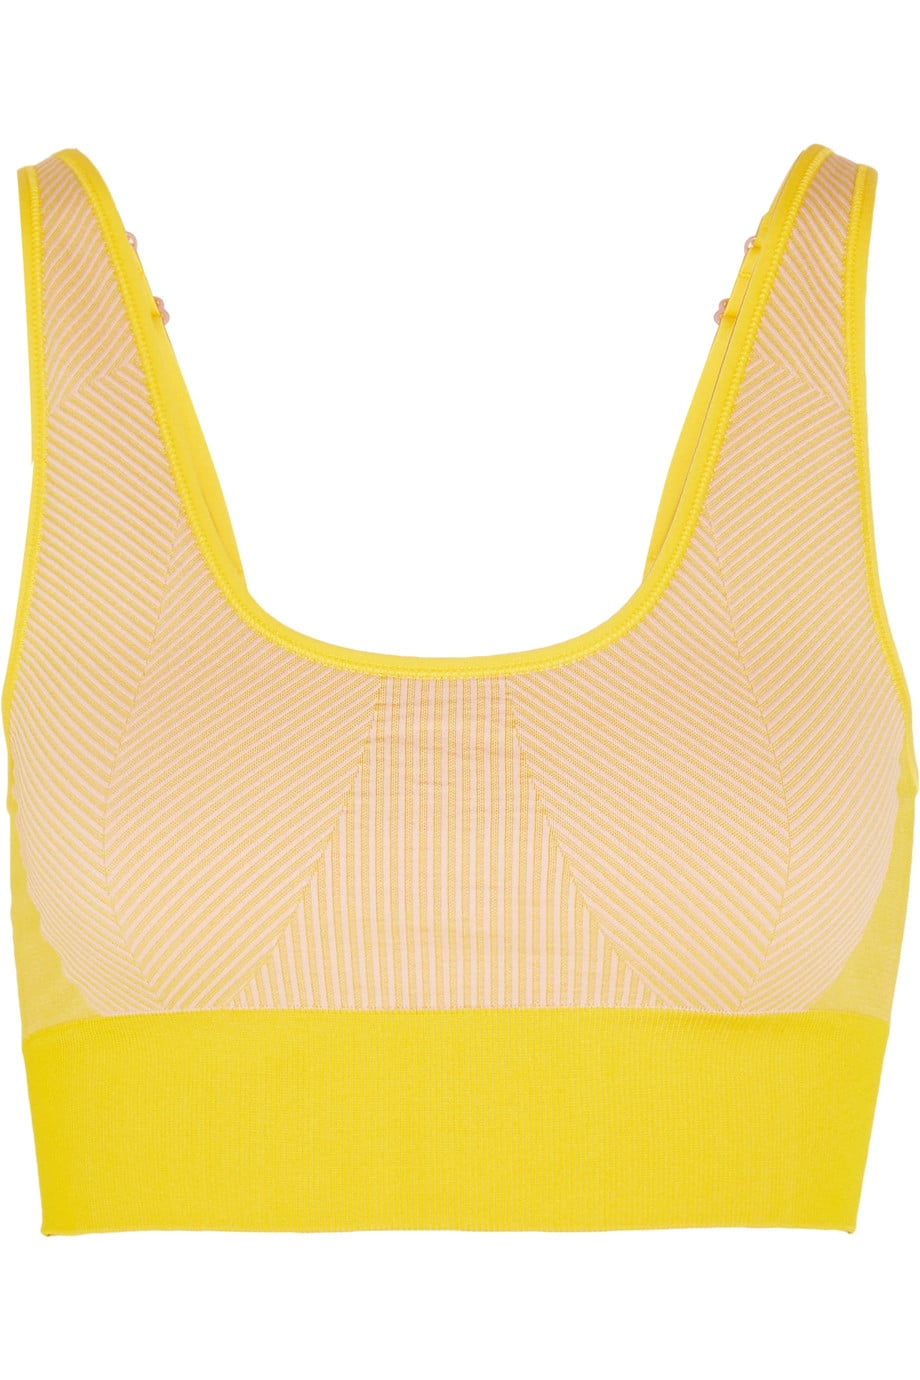 yellow adidas sports bra